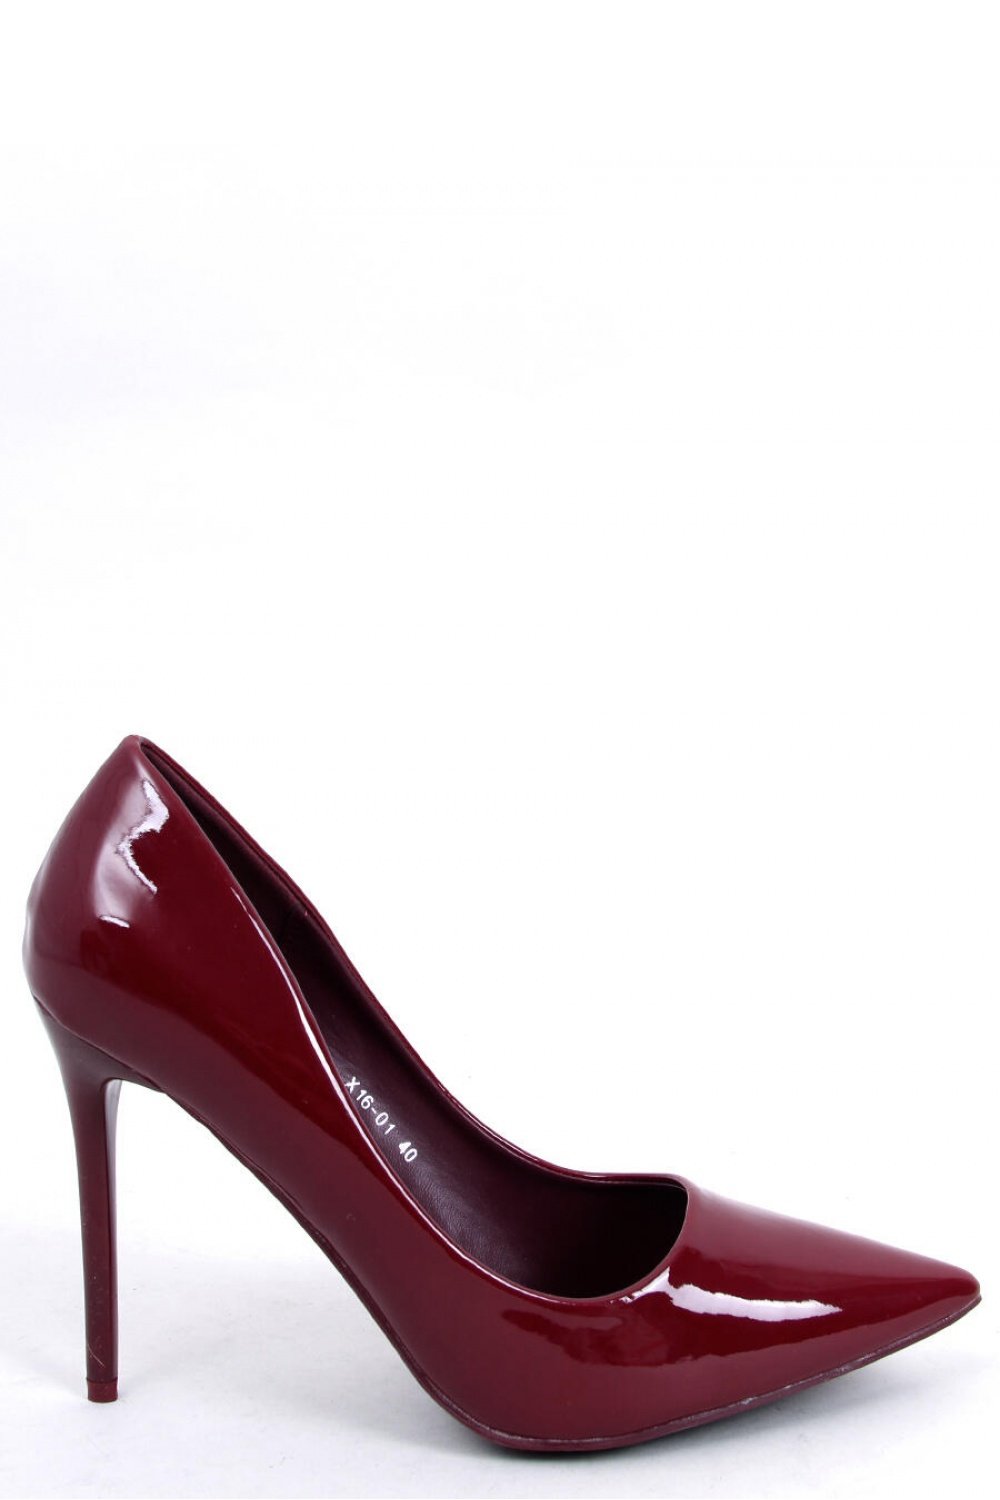 High heels model 174516 Inello Posh Styles Apparel